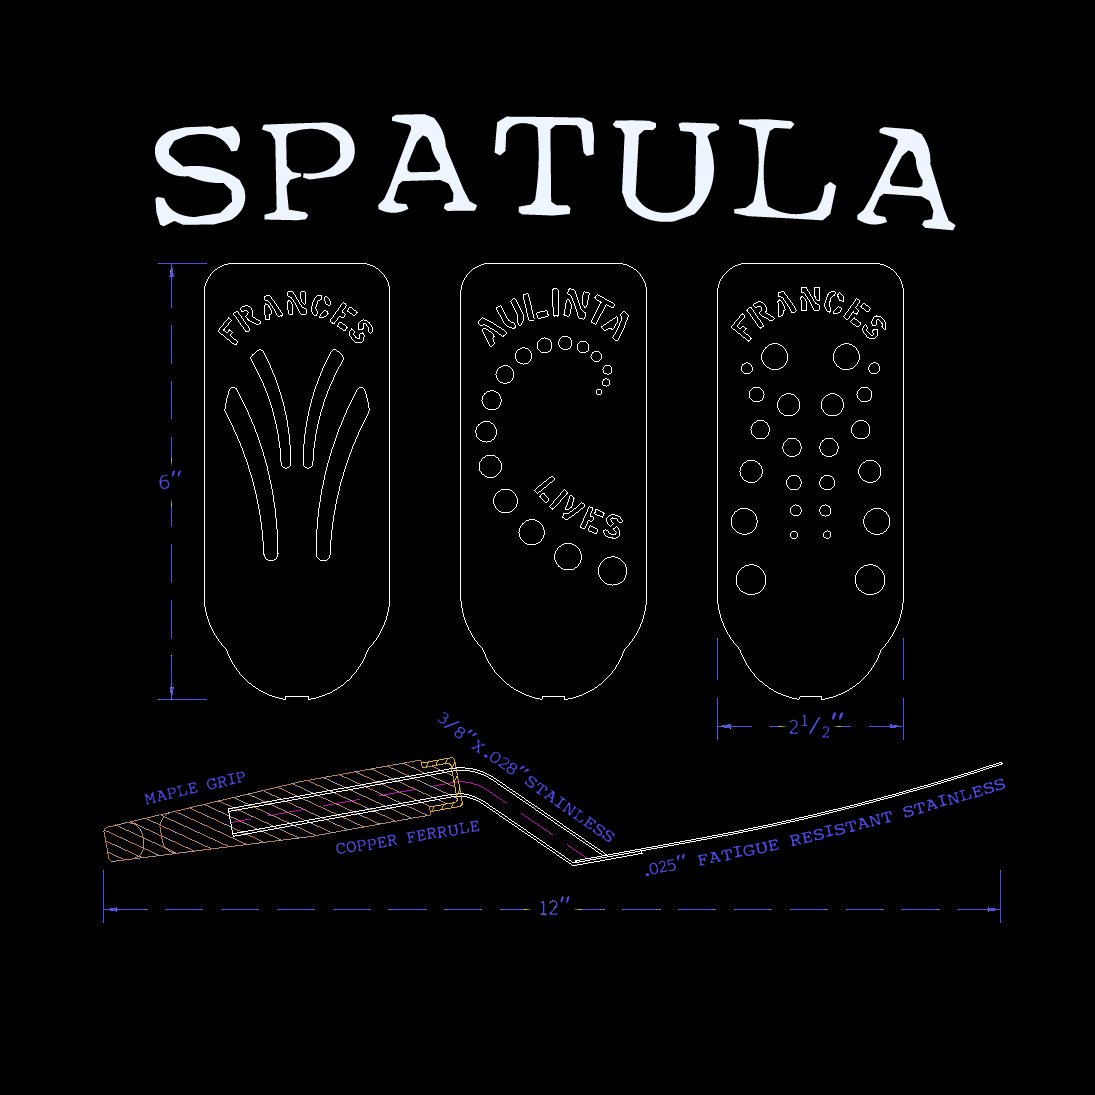 Splatypus Spatula - Home